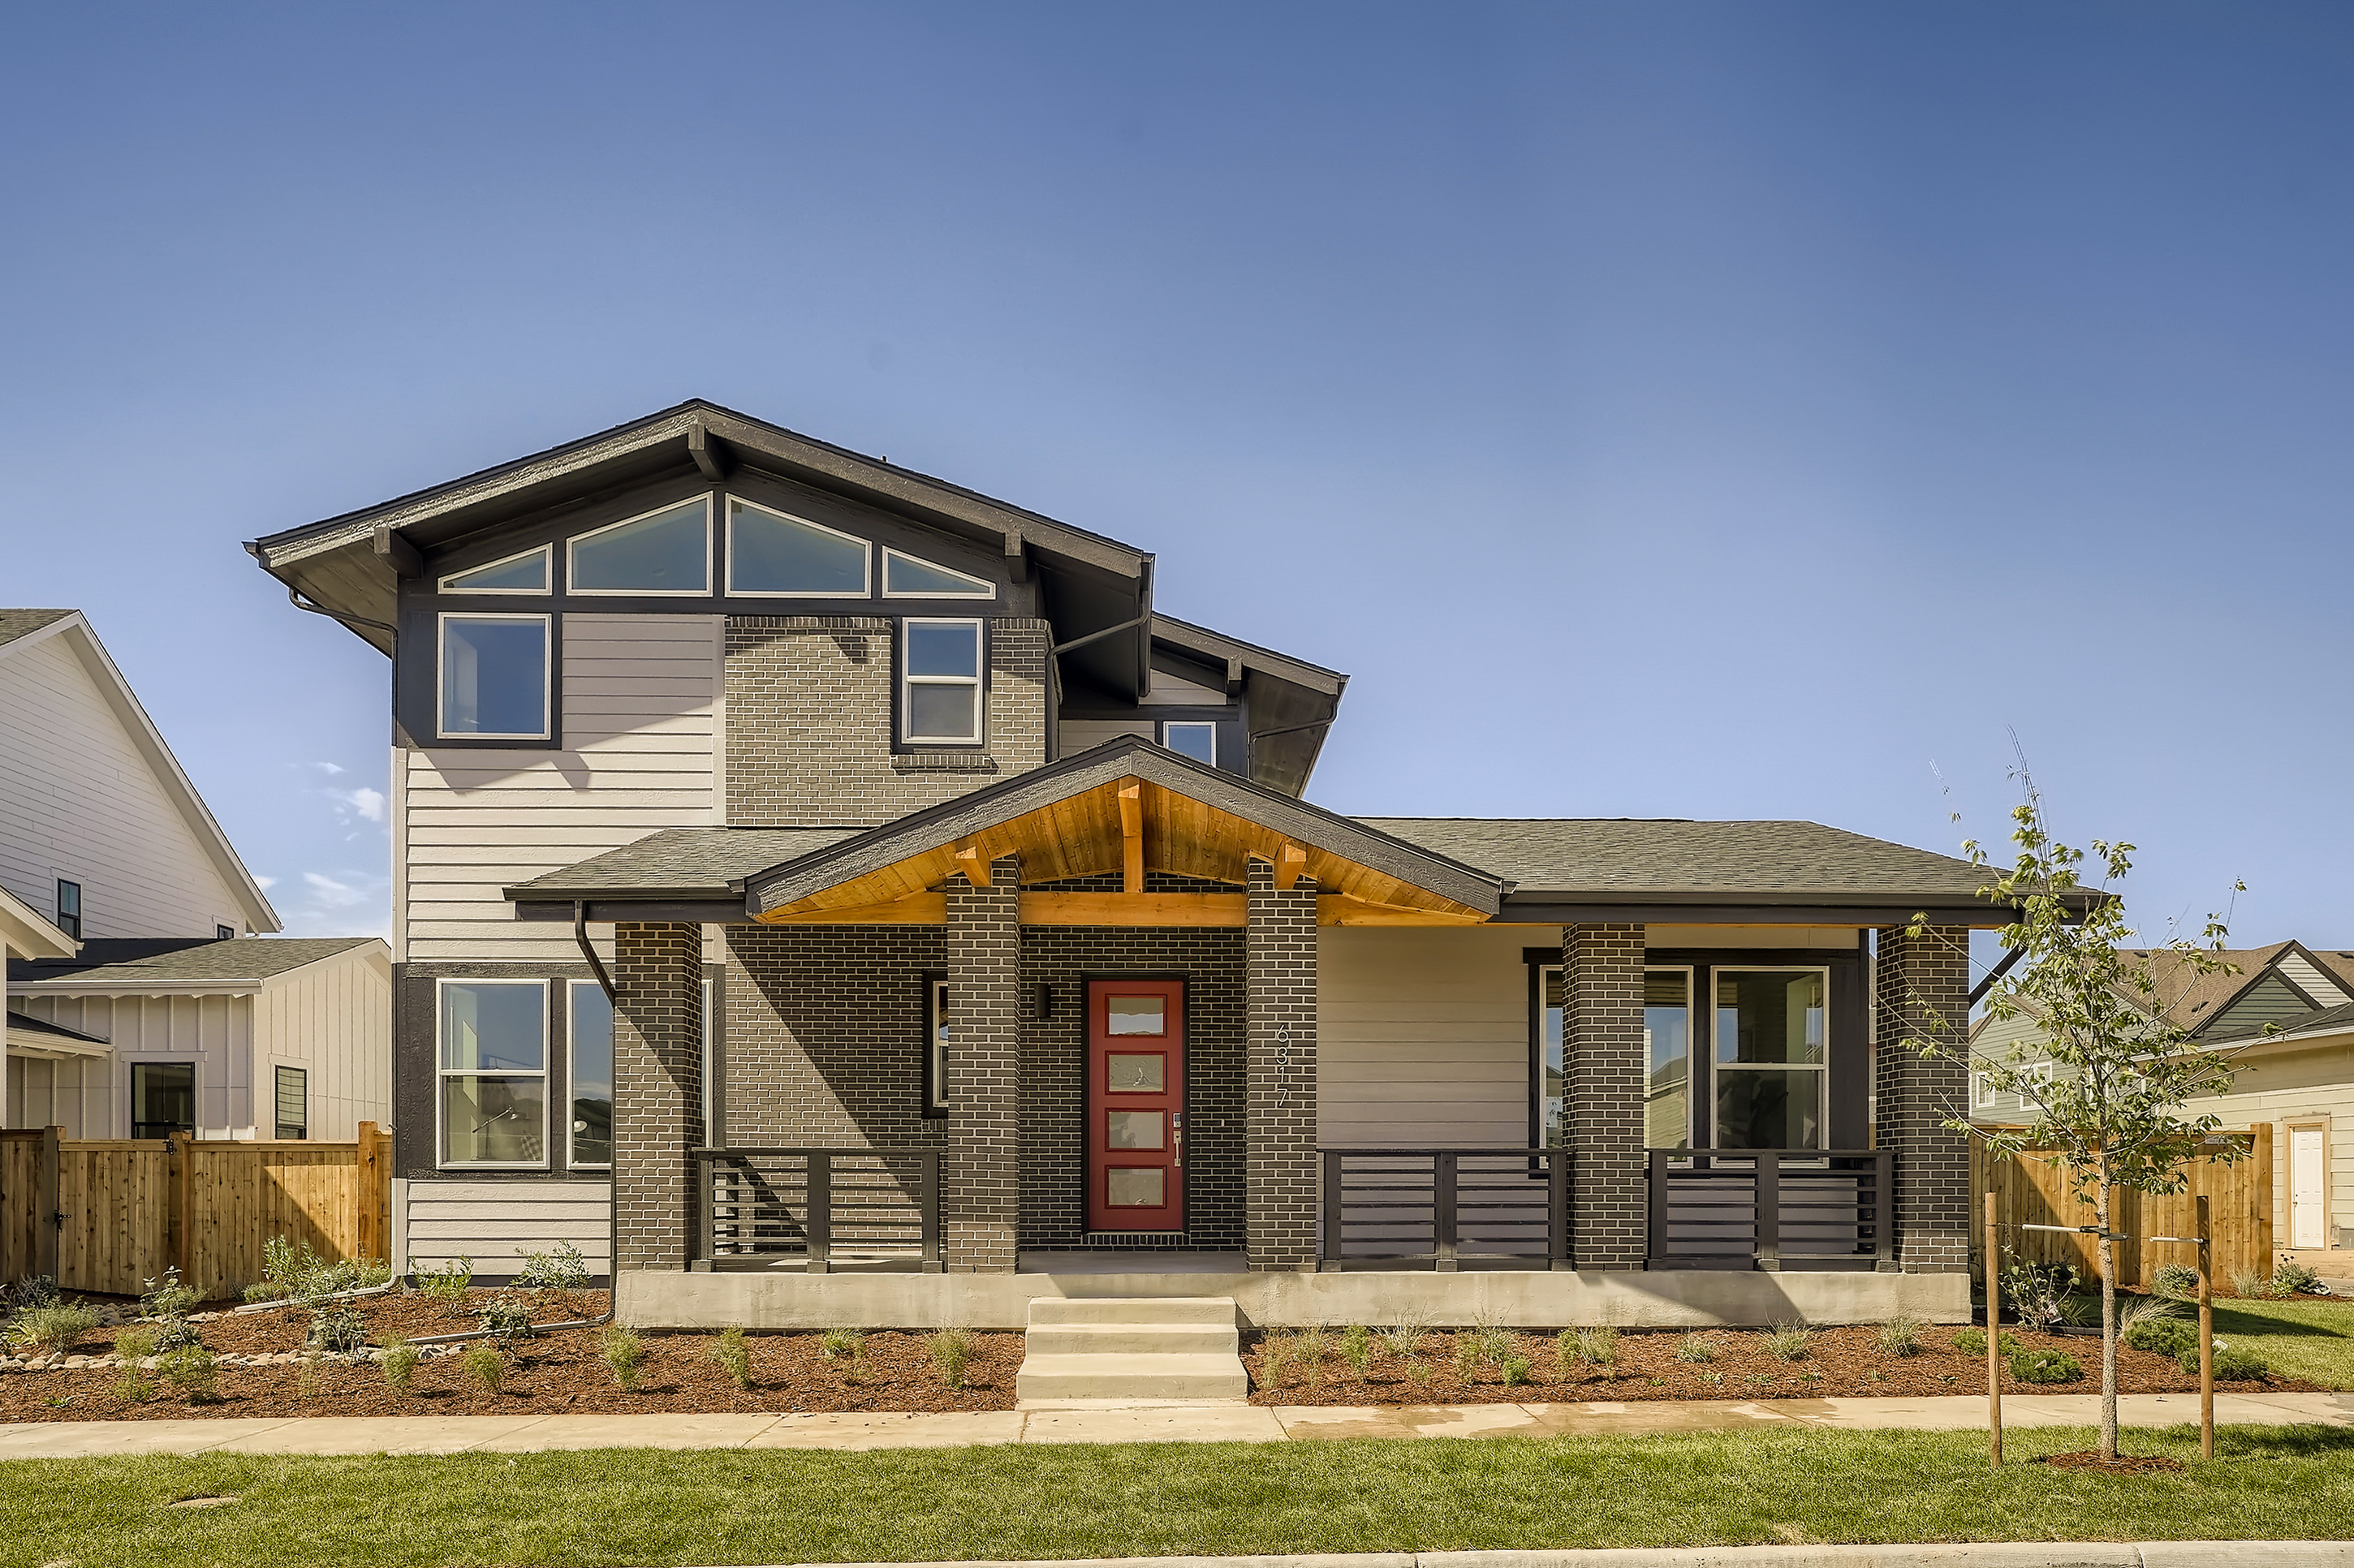 Denver home exterior by Thrive Home Builders